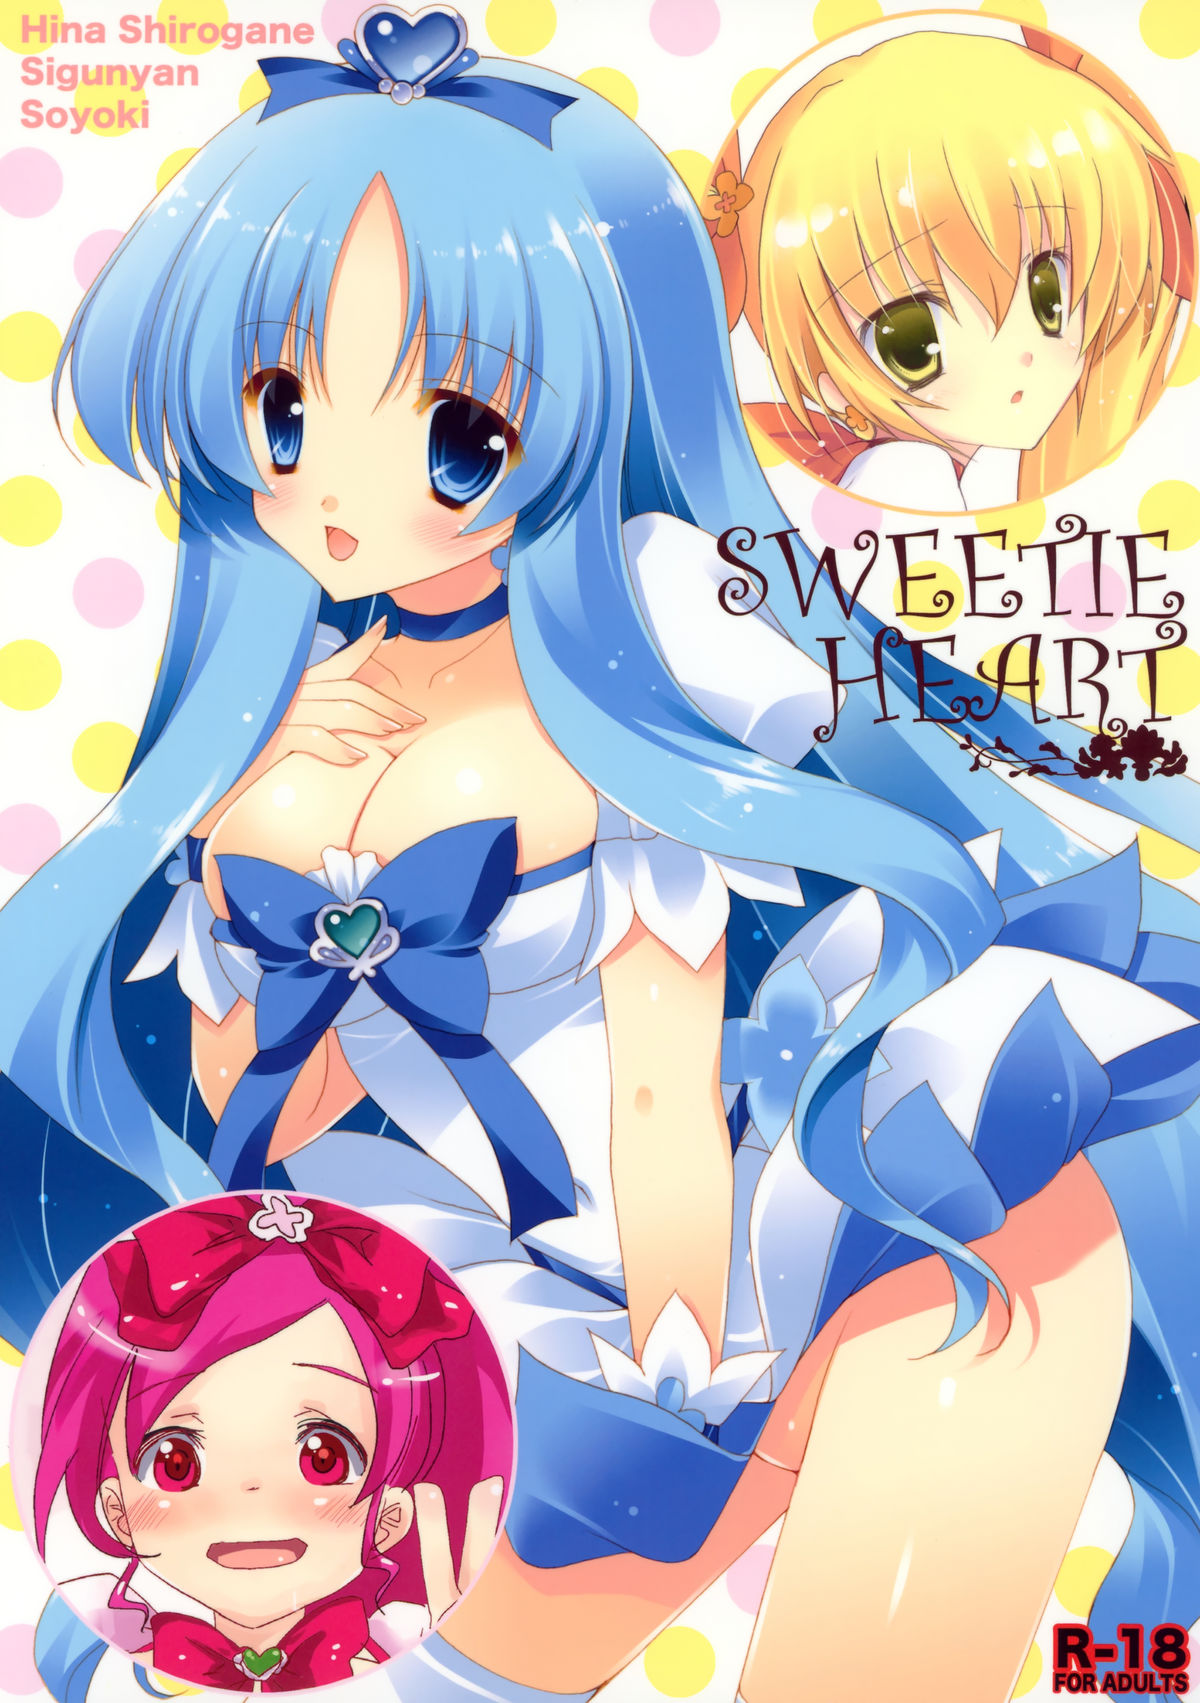 [Shigunyan] (Shigunyan, Soyoki &amp; Shirogane Hina) - Sweetie Heart (fullcolour) 